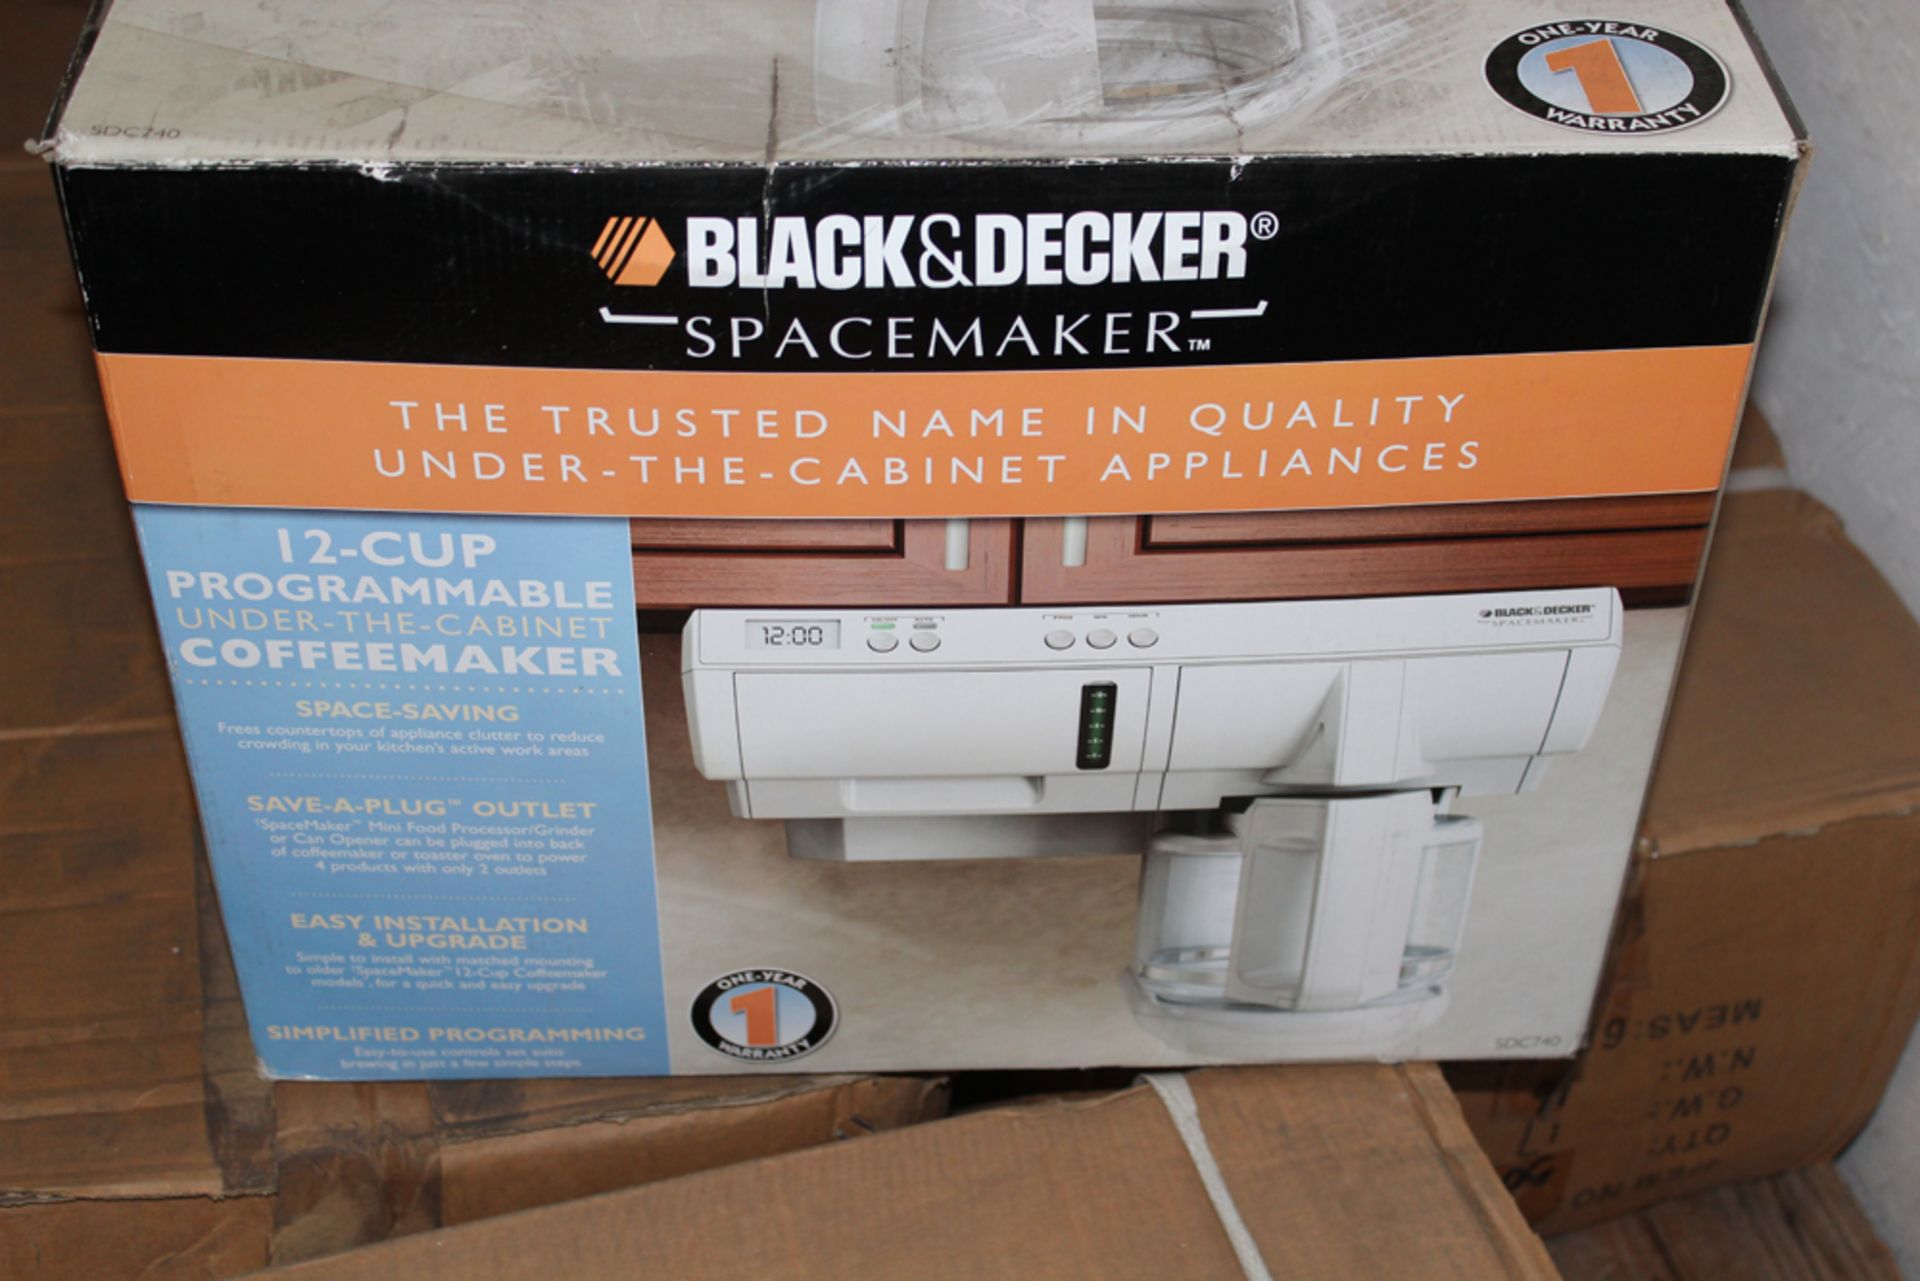 Black & Decker spacemaker coffee maker - Image 2 of 2